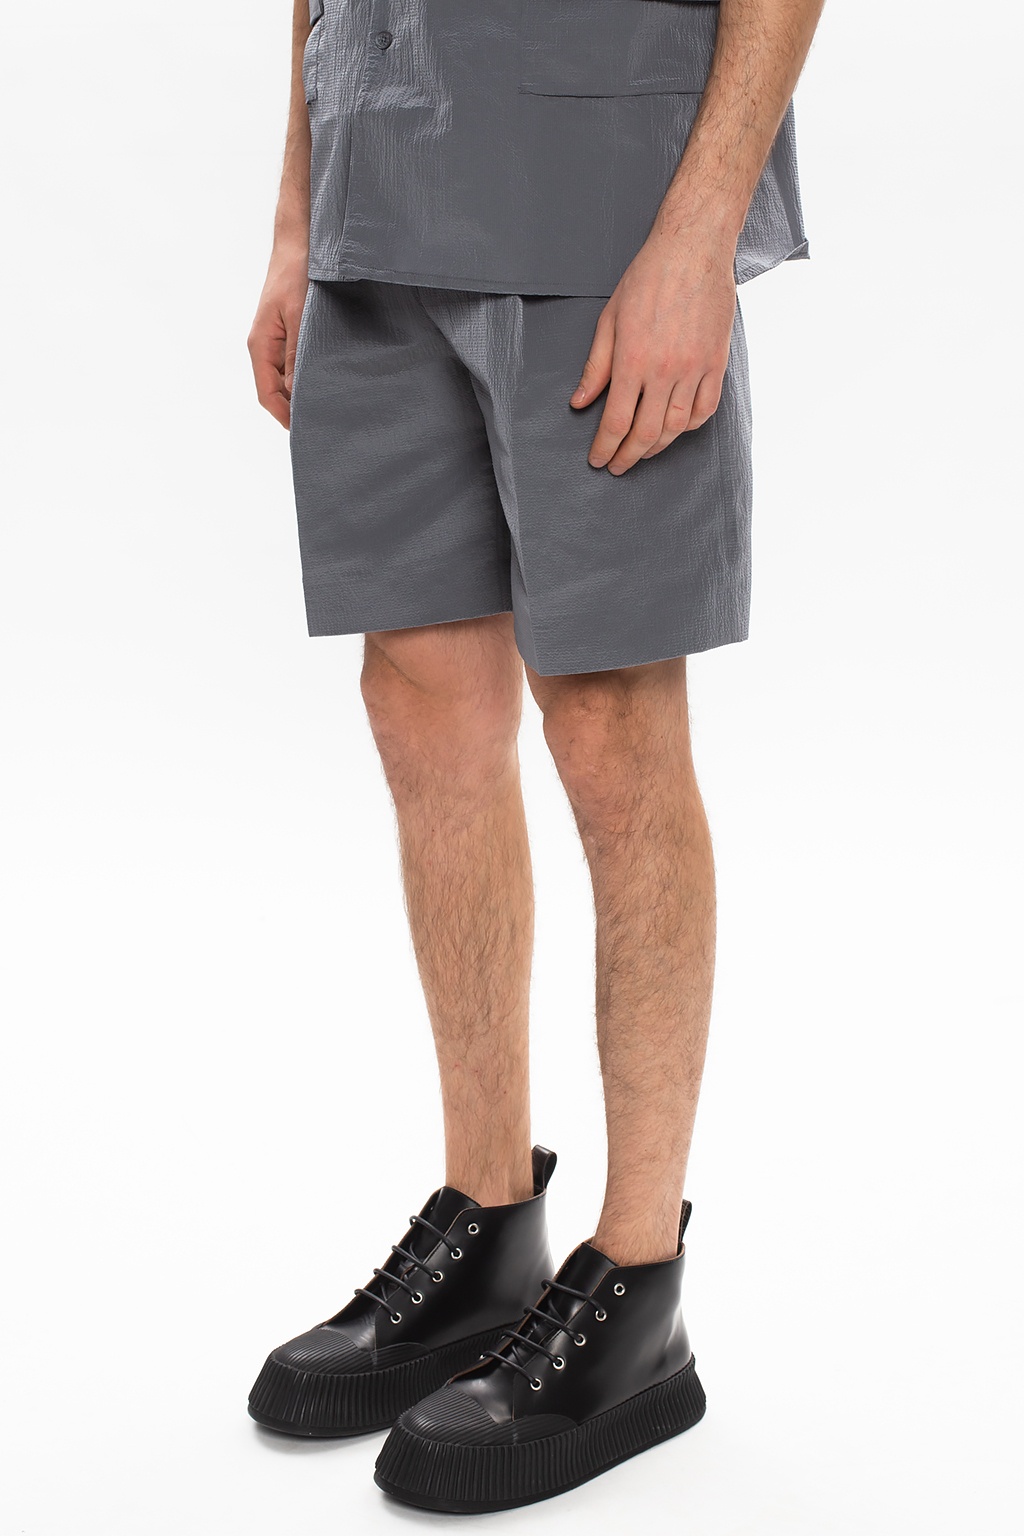 Givenchy Pleated shorts